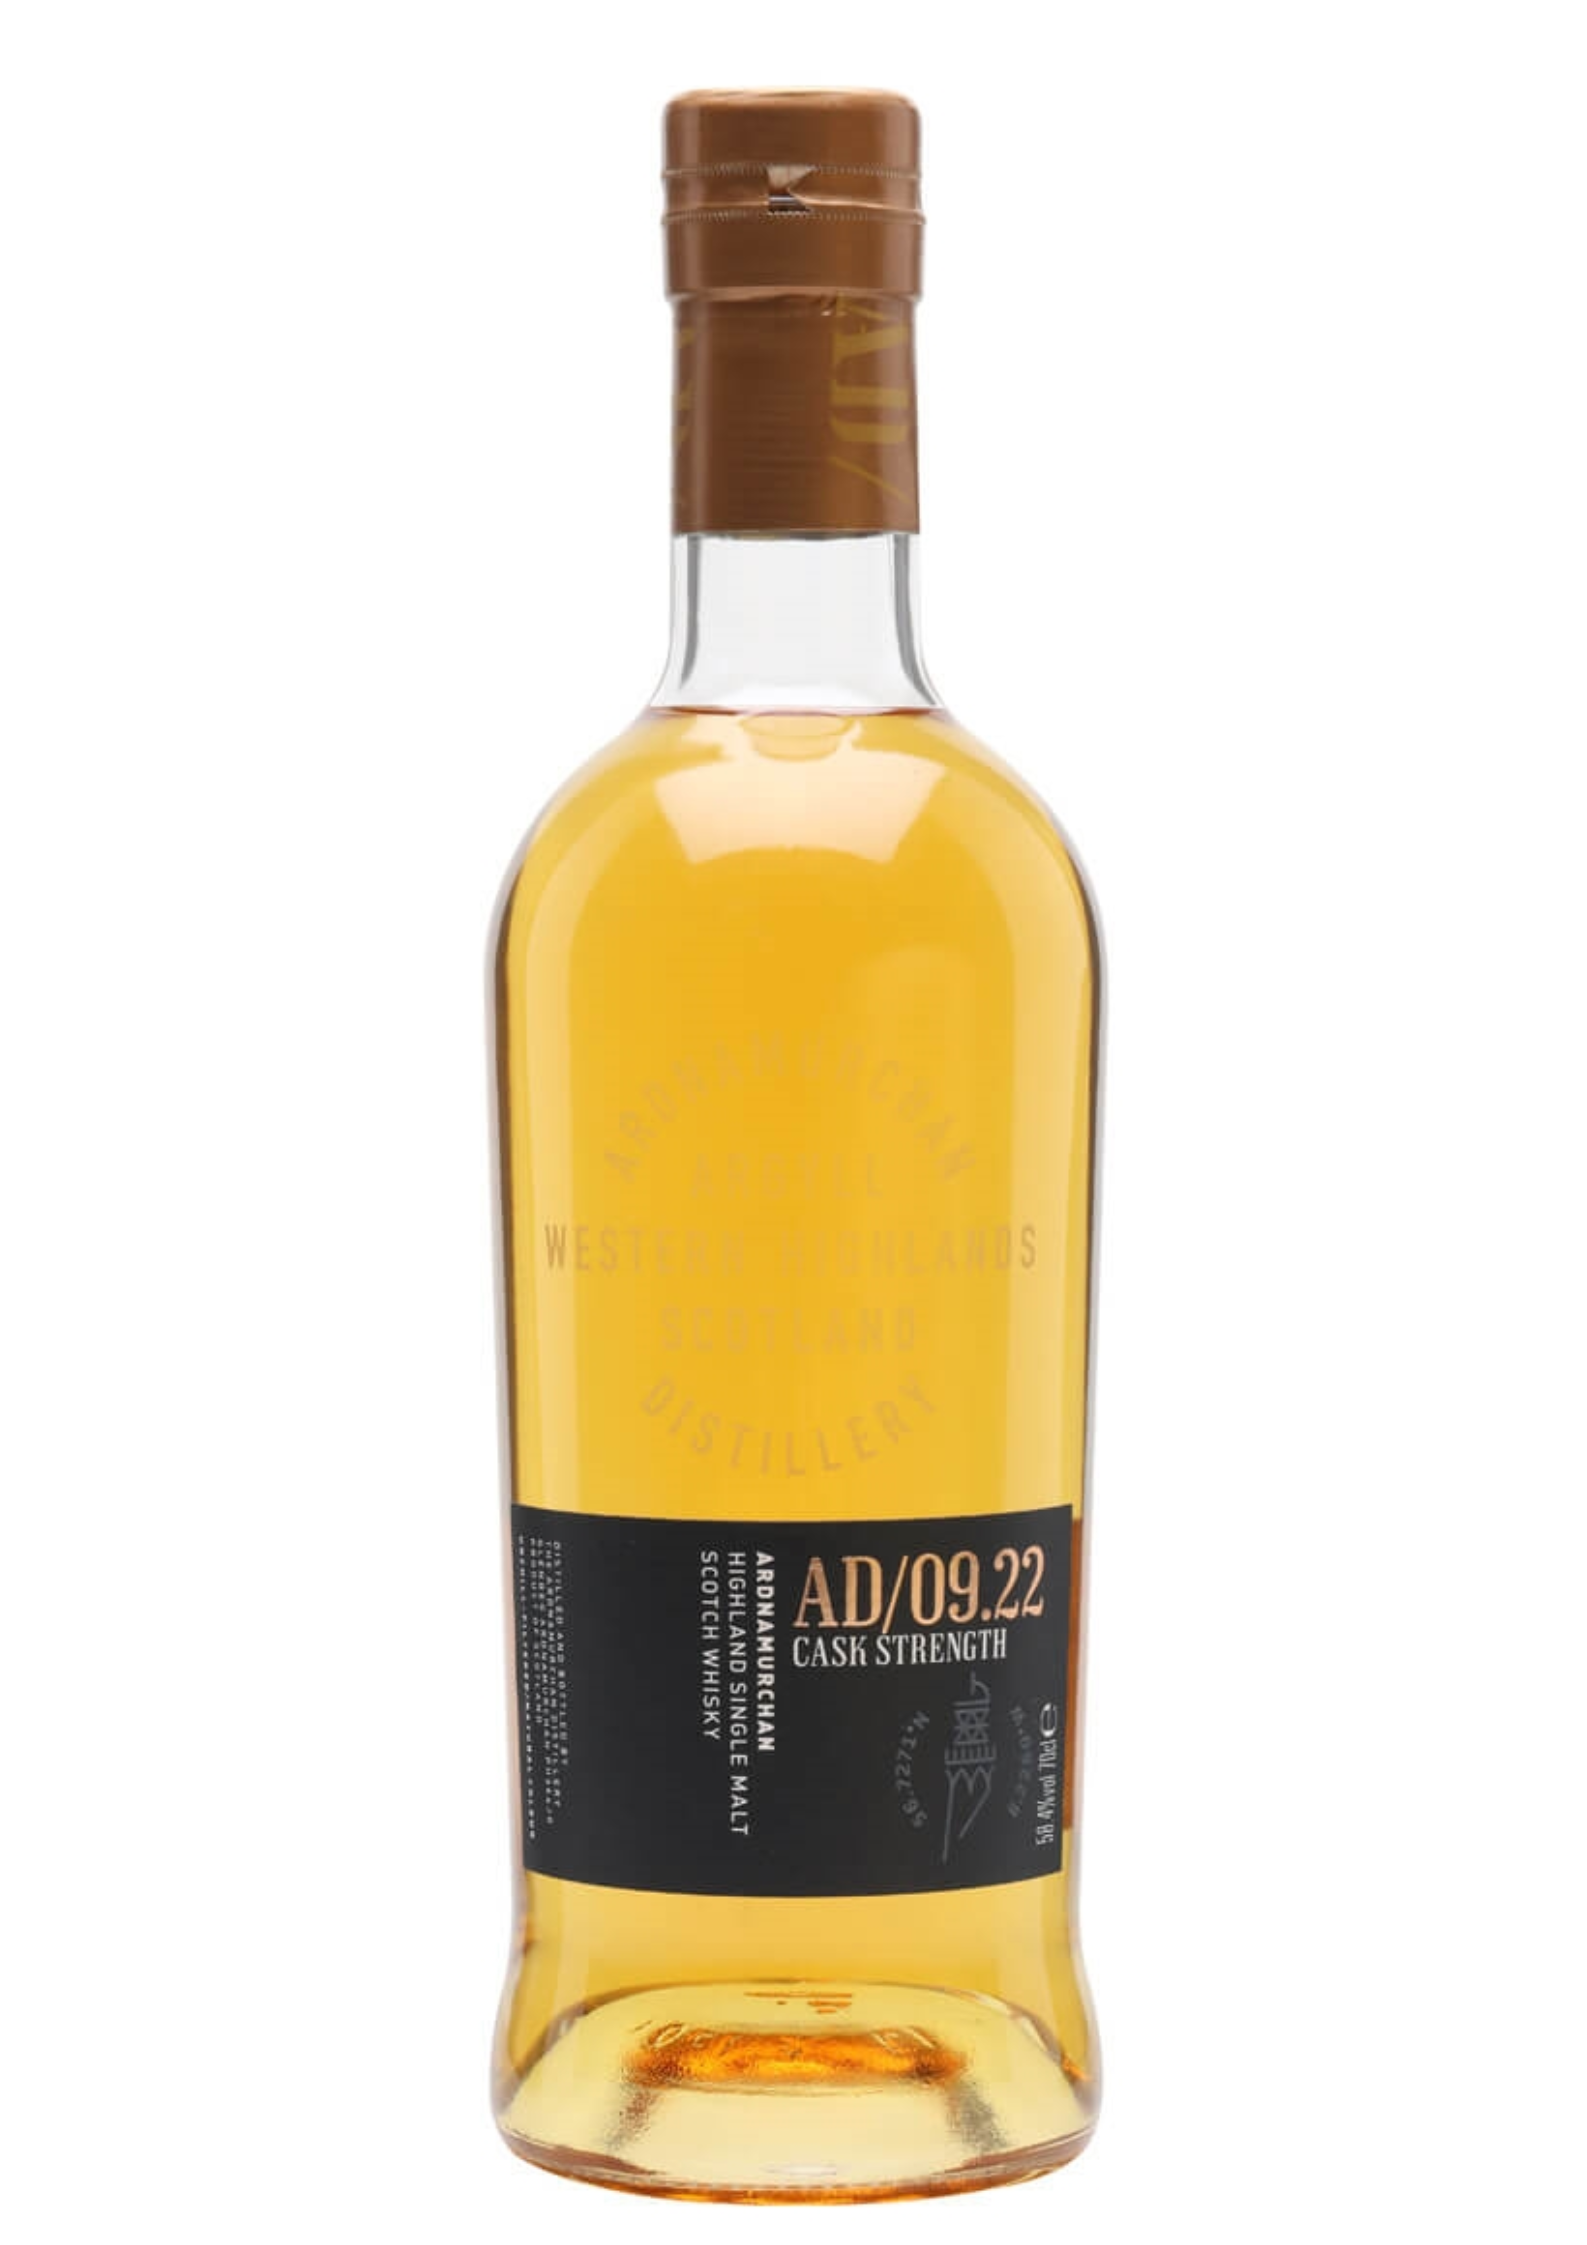 Bottle of Ardnamurchan AD/09.22 Cask Strength Single Malt Whisky, 58.4% - The Spirits Room